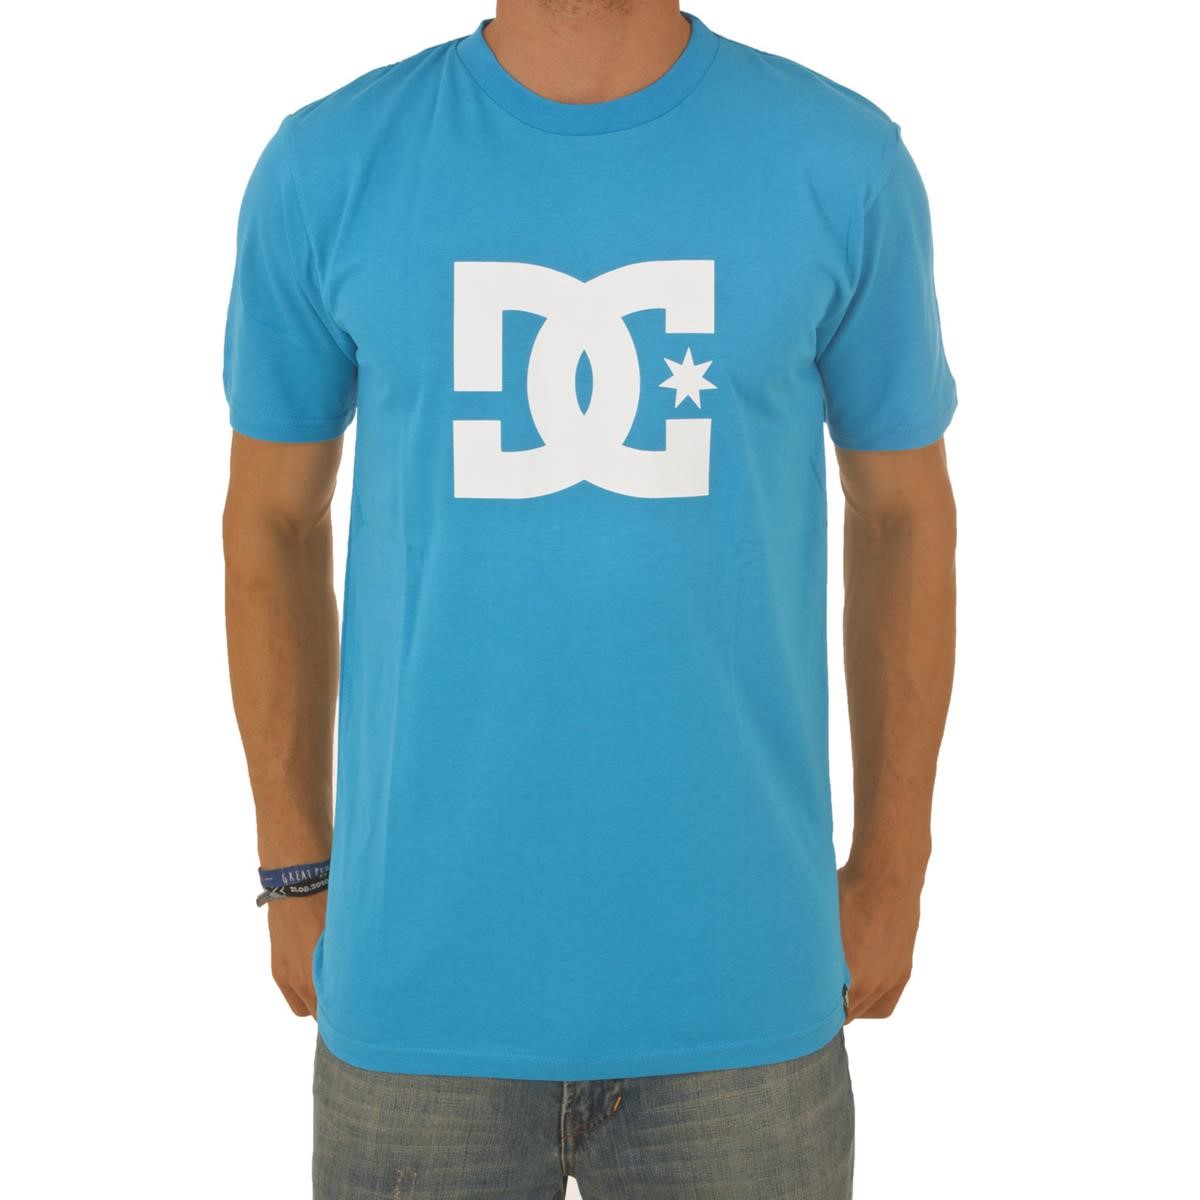 Freizeit/Streetwear Bekleidung-T-Shirts/Polos - DC T-Shirt Star Vivid Blue